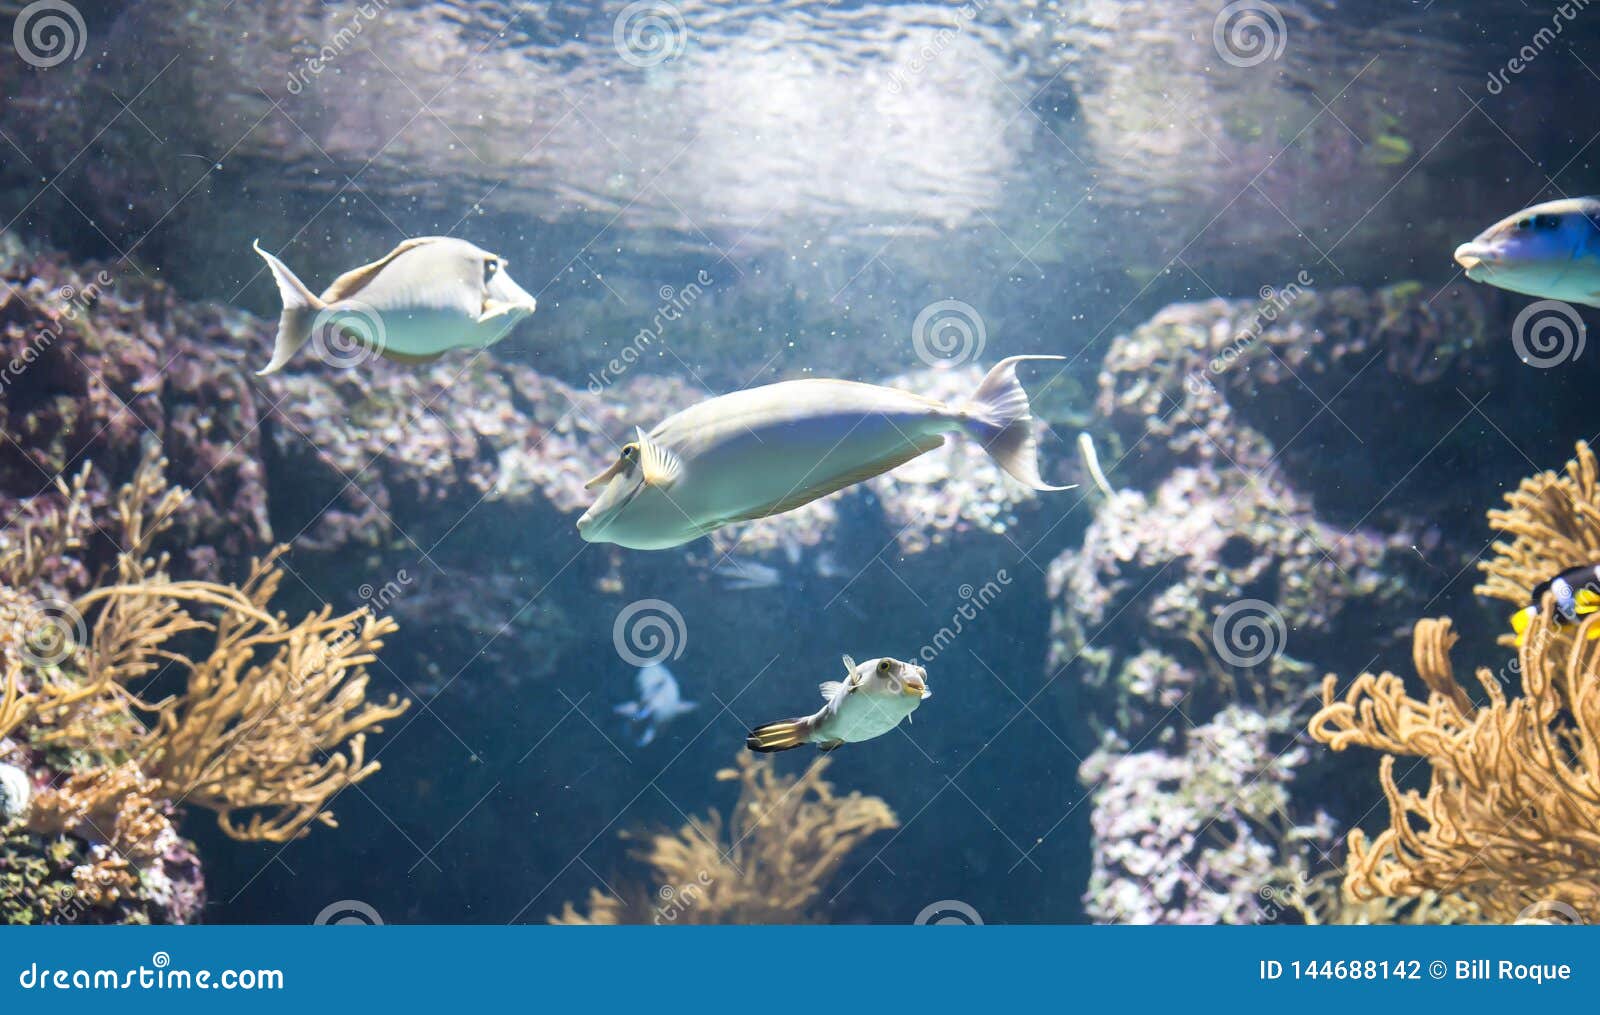 Blurry Photo of Unicorn Fish in a Sea Aquarium Stock Photo - Image of ...